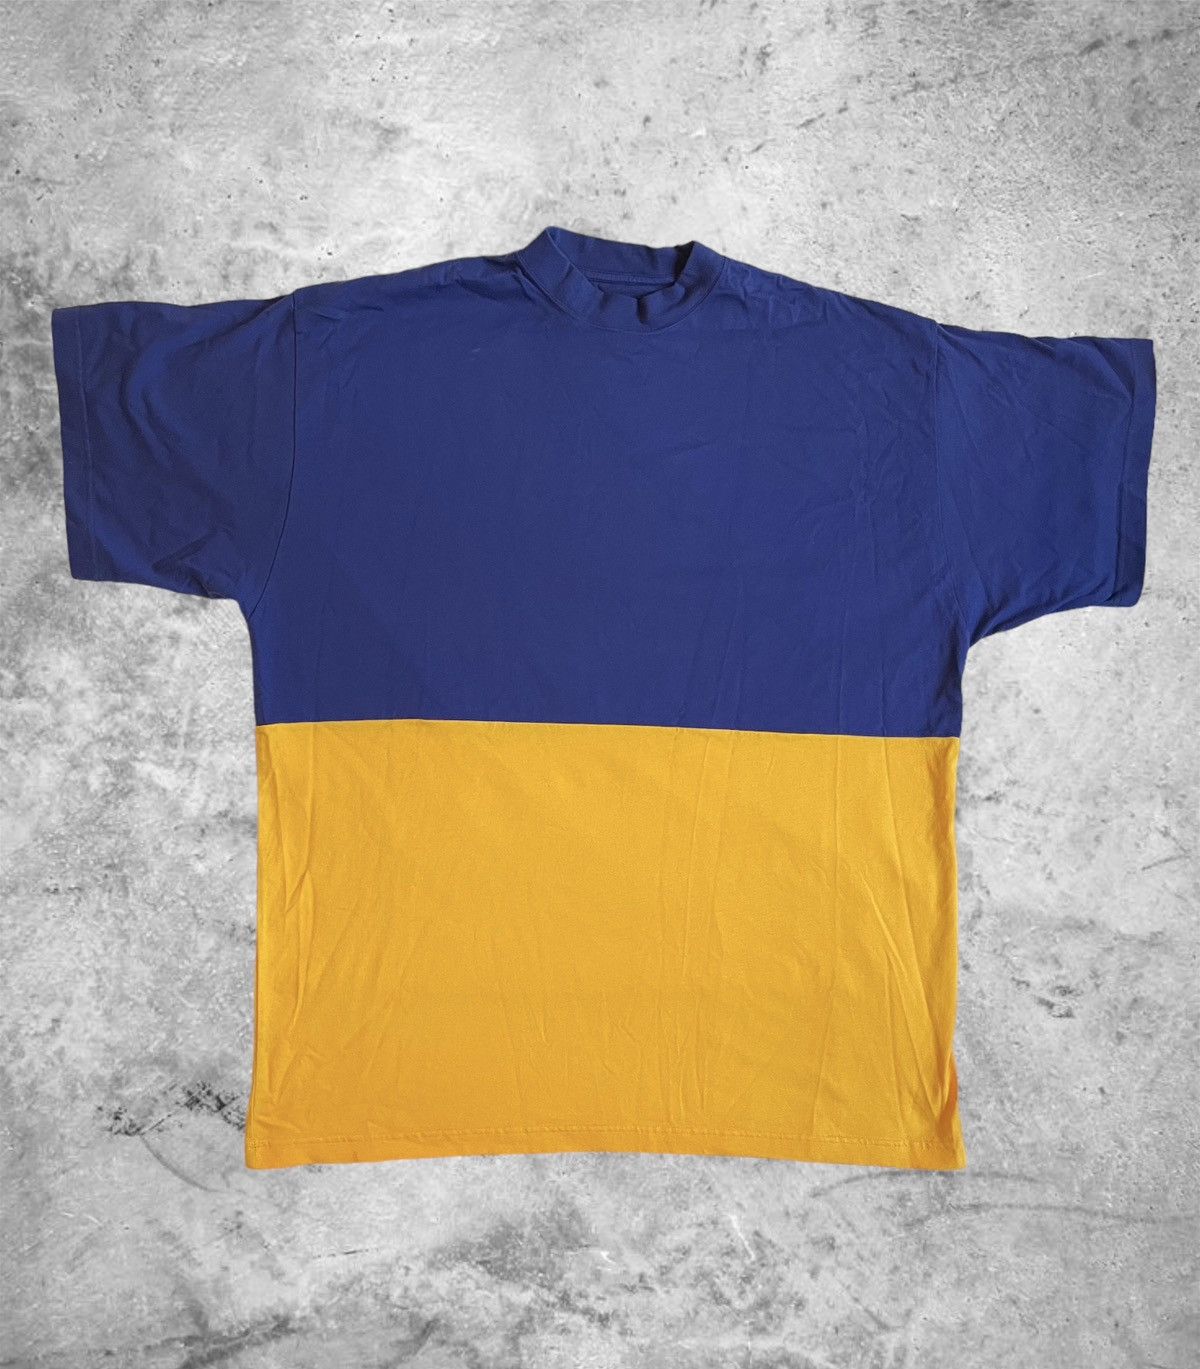 Balenciaga Ukraine T Shirt | Grailed